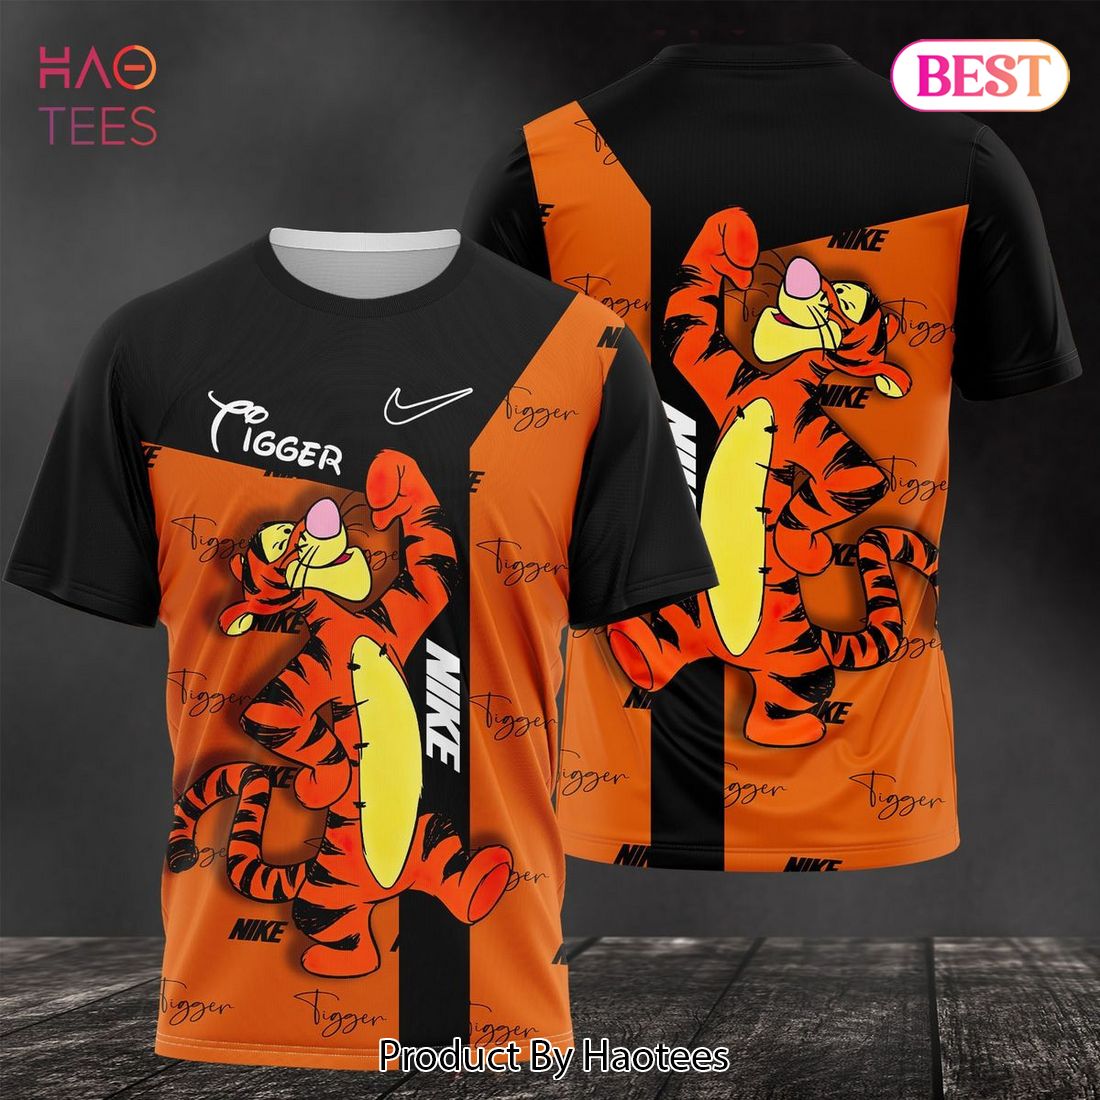 HOT Nike Orange Mix Black Luxury Brand 3D T-Shirt Limited Edition